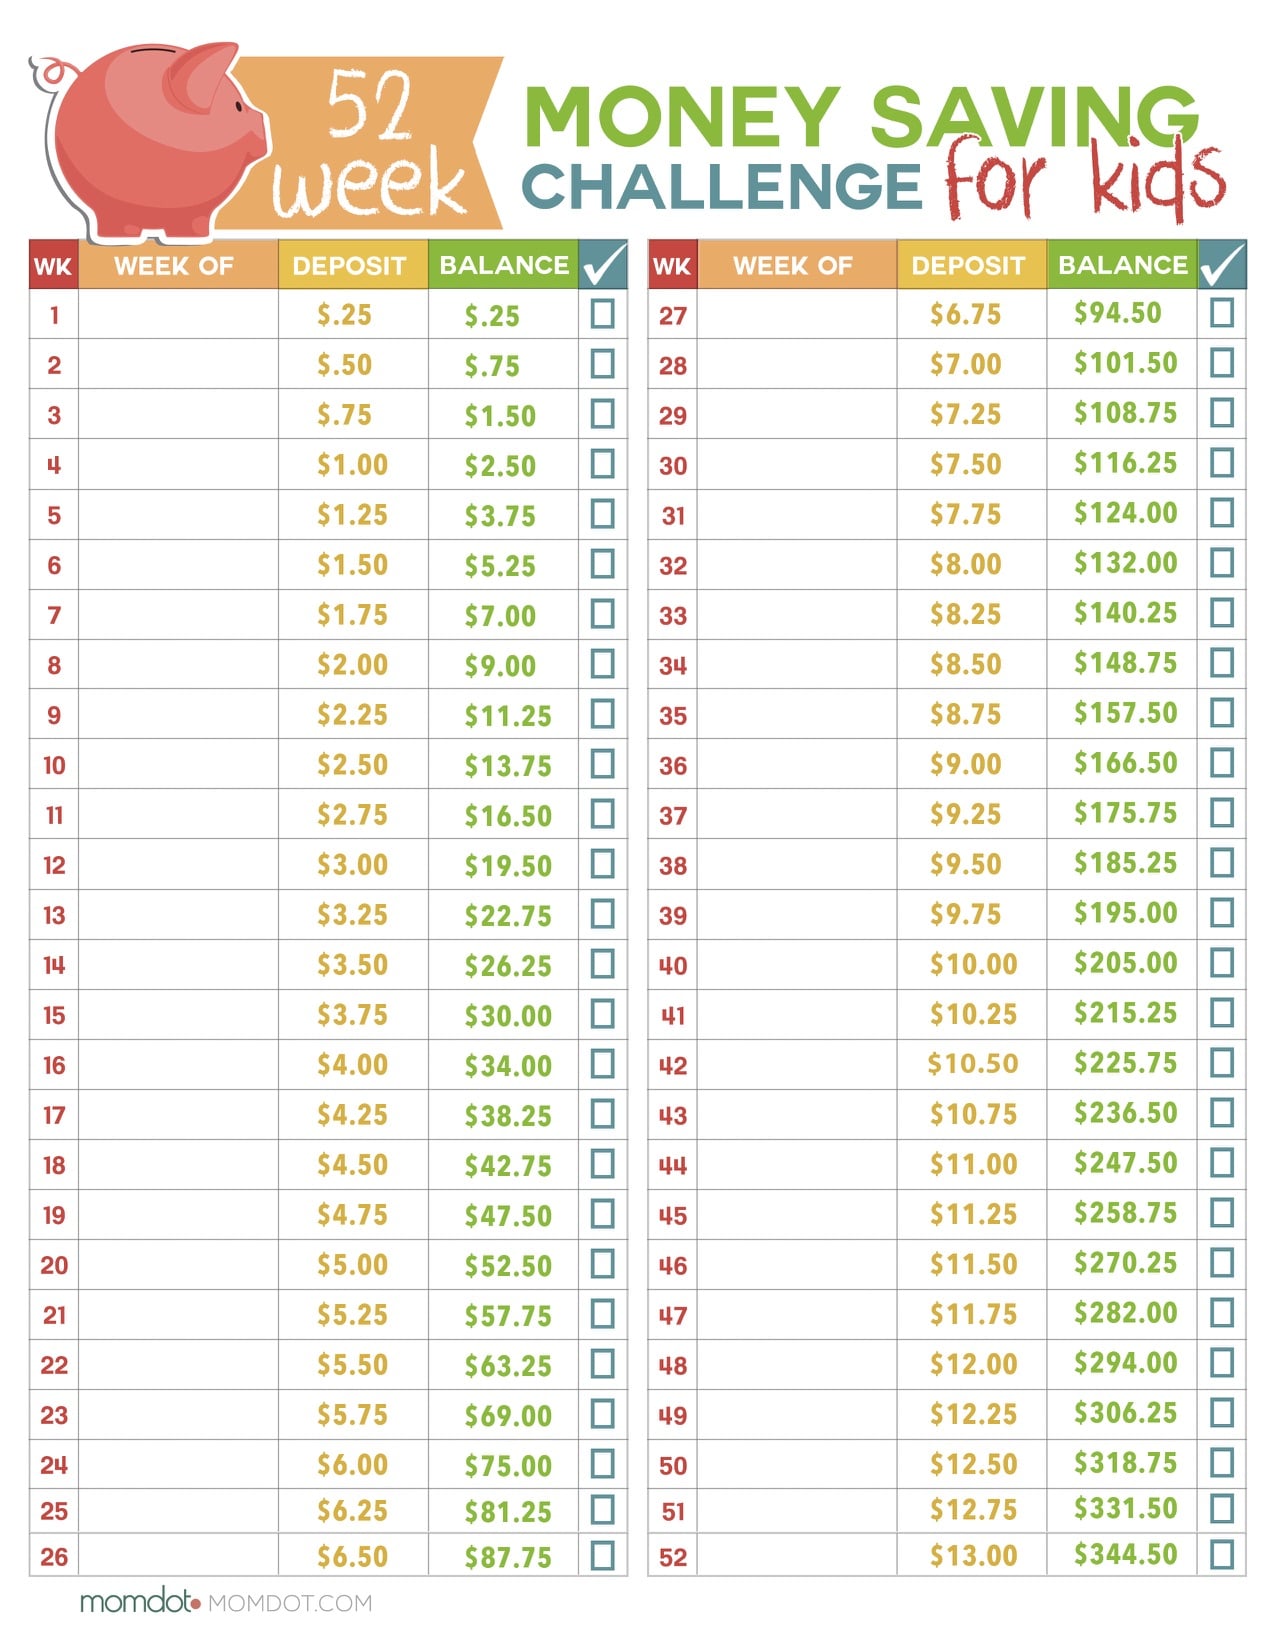 52 Week Money Challenge for Kids Money Saving Printable